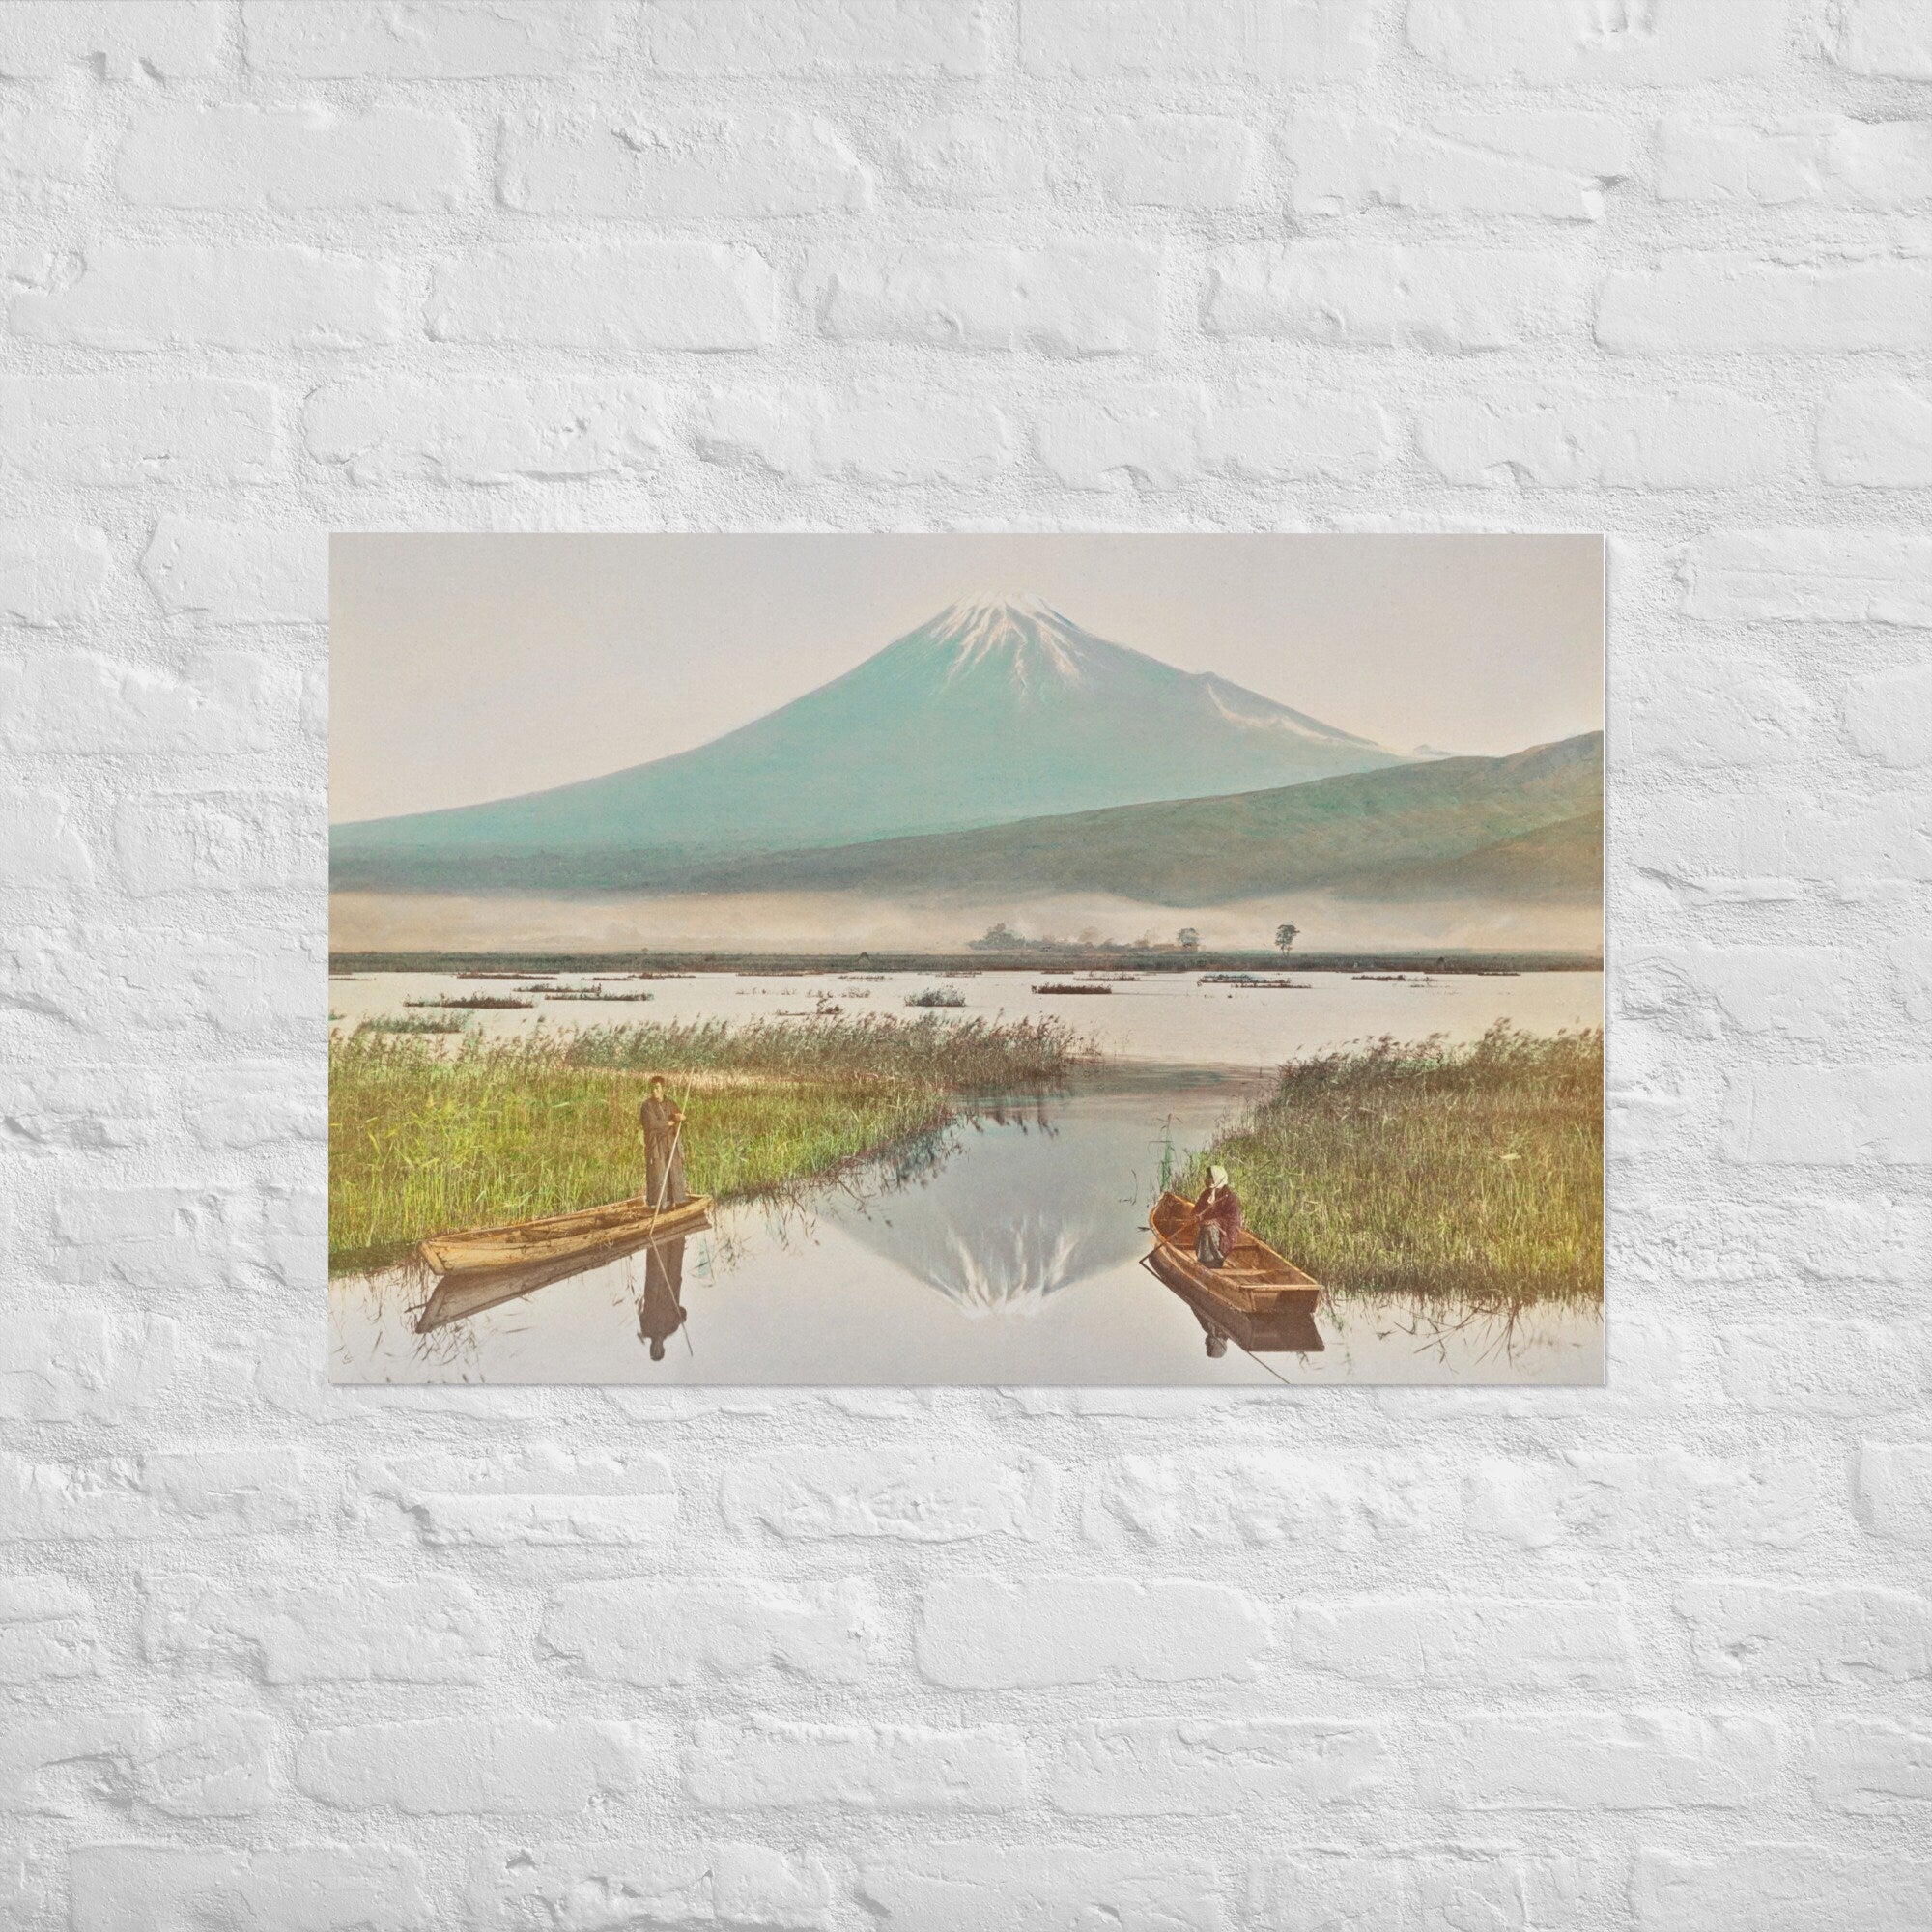 Stunning Poster Print Wall Art of Mount Fuji as Seen from Kashiwabara by Kazumasa Ogawa | Wall Hanging Vintage Photo Decor